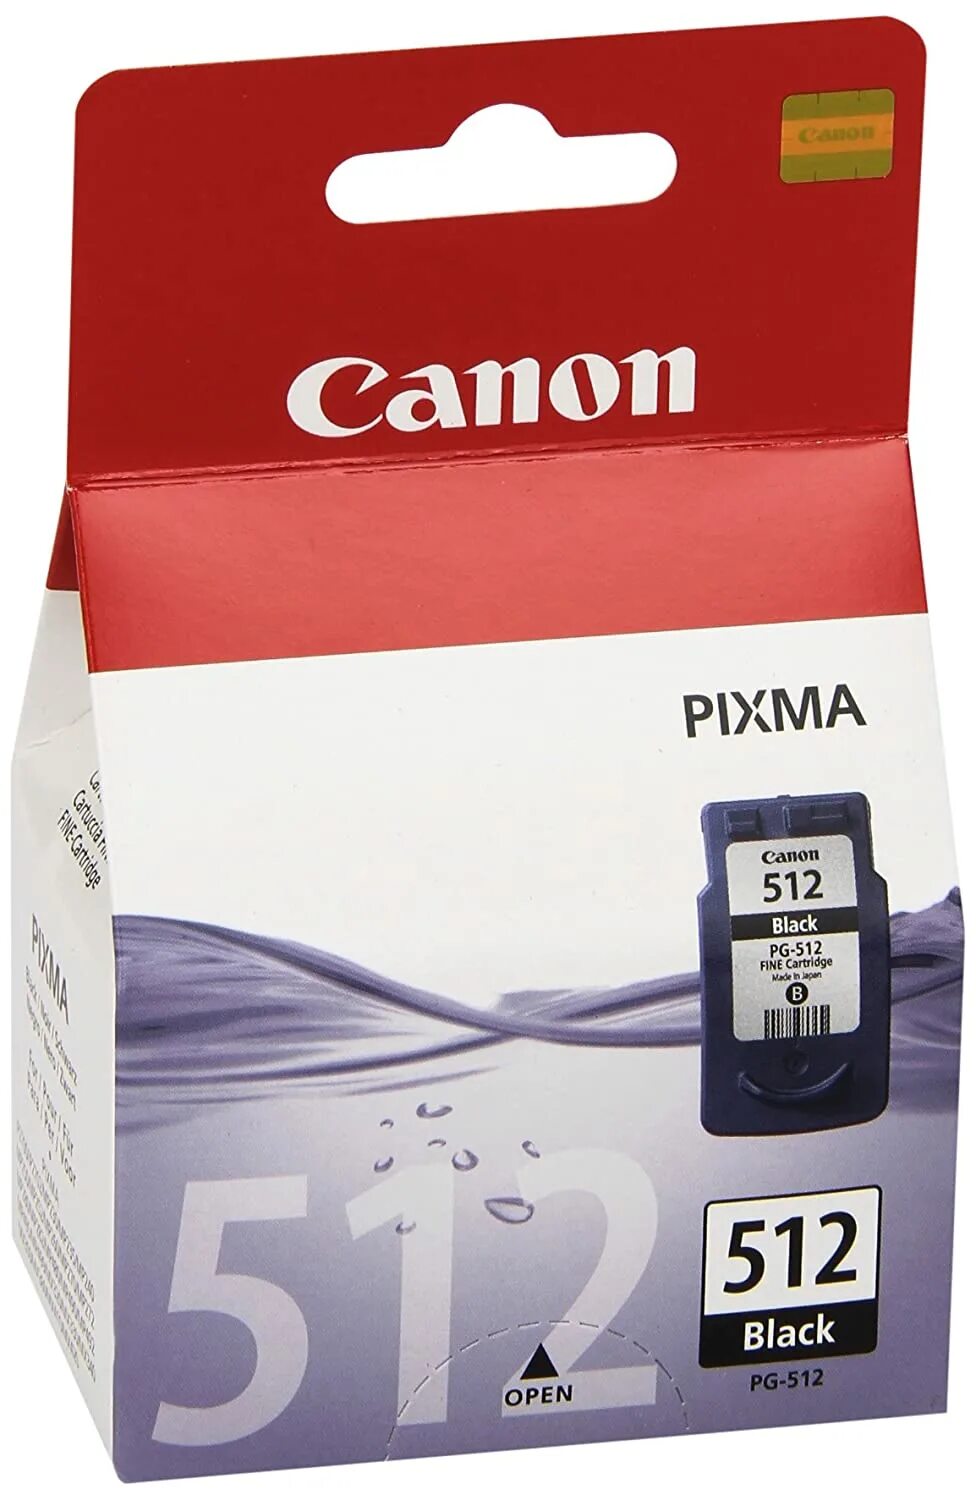 Картридж Canon PG-512. Картридж для принтера Canon 512. 512 Картридж Canon цветной. Картридж Fine PG 512.